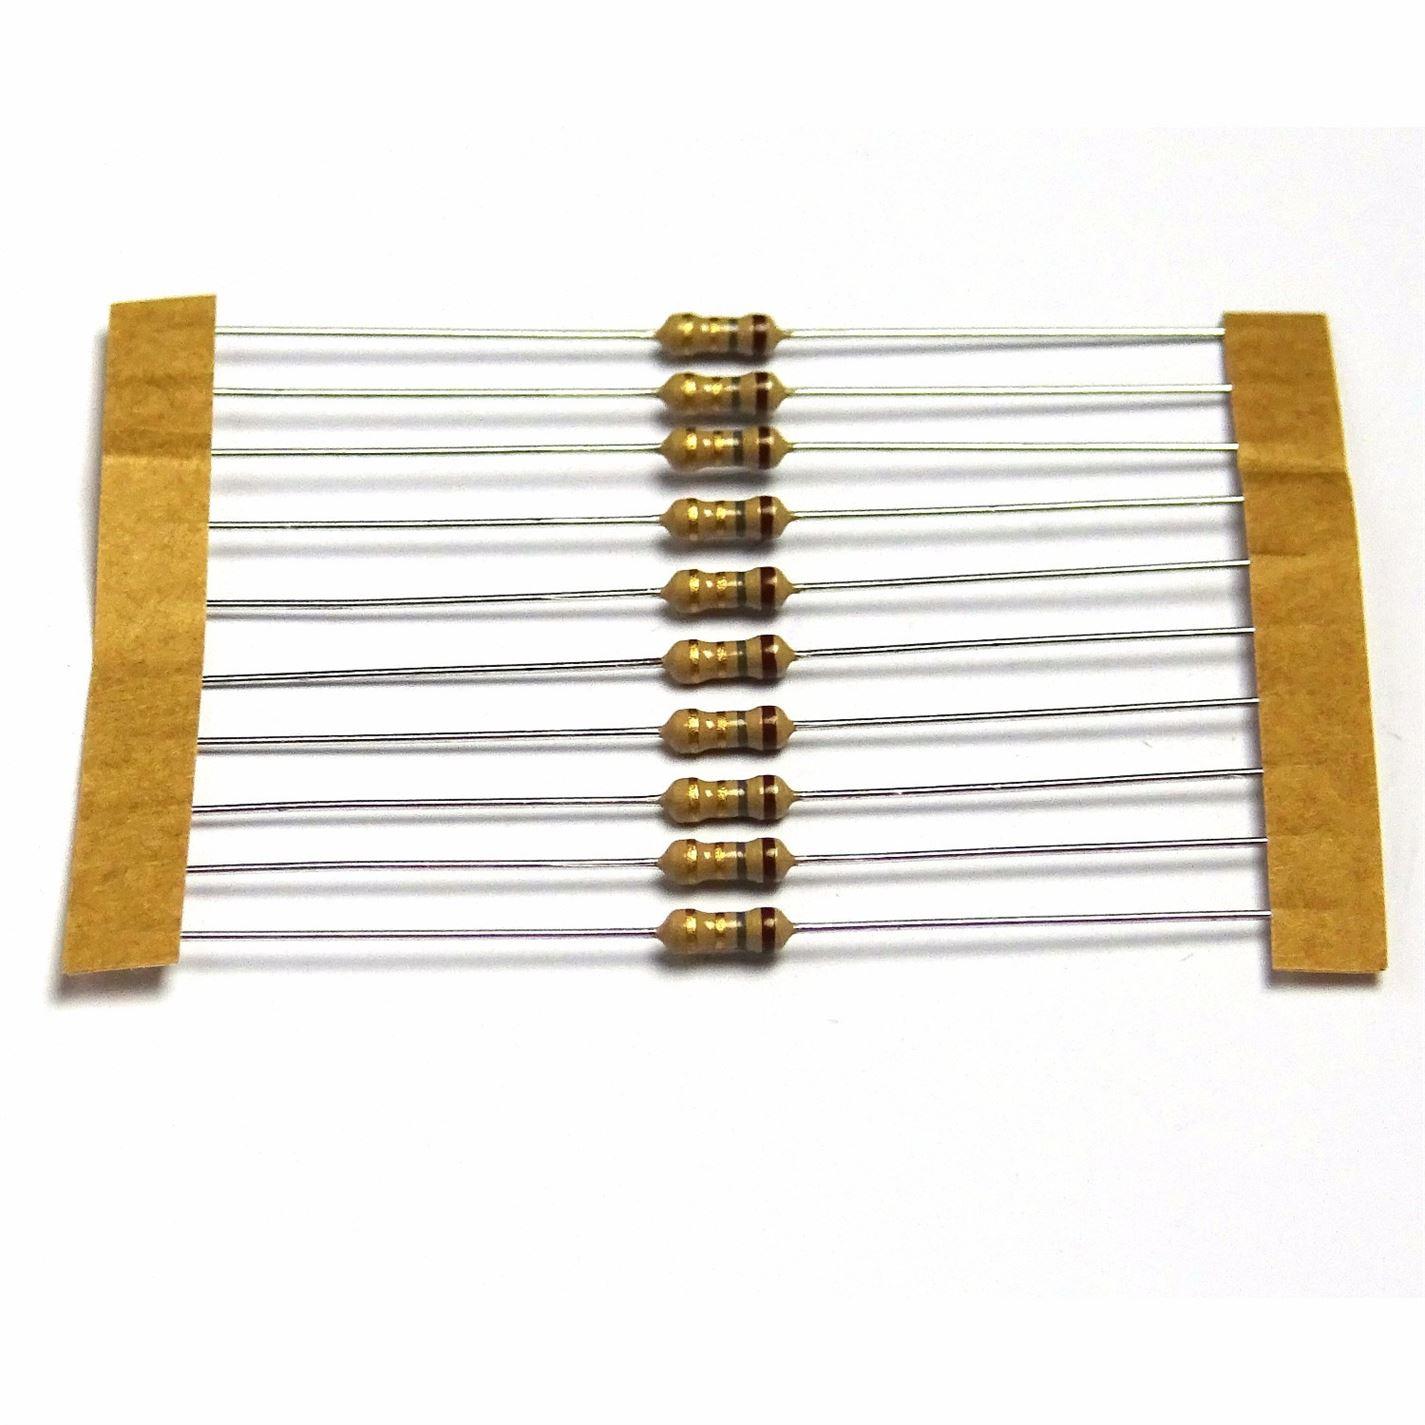 10 x resistors 1.8 ohm ohms 1/4w 0.25w 5% Carbon Film - UK Seller